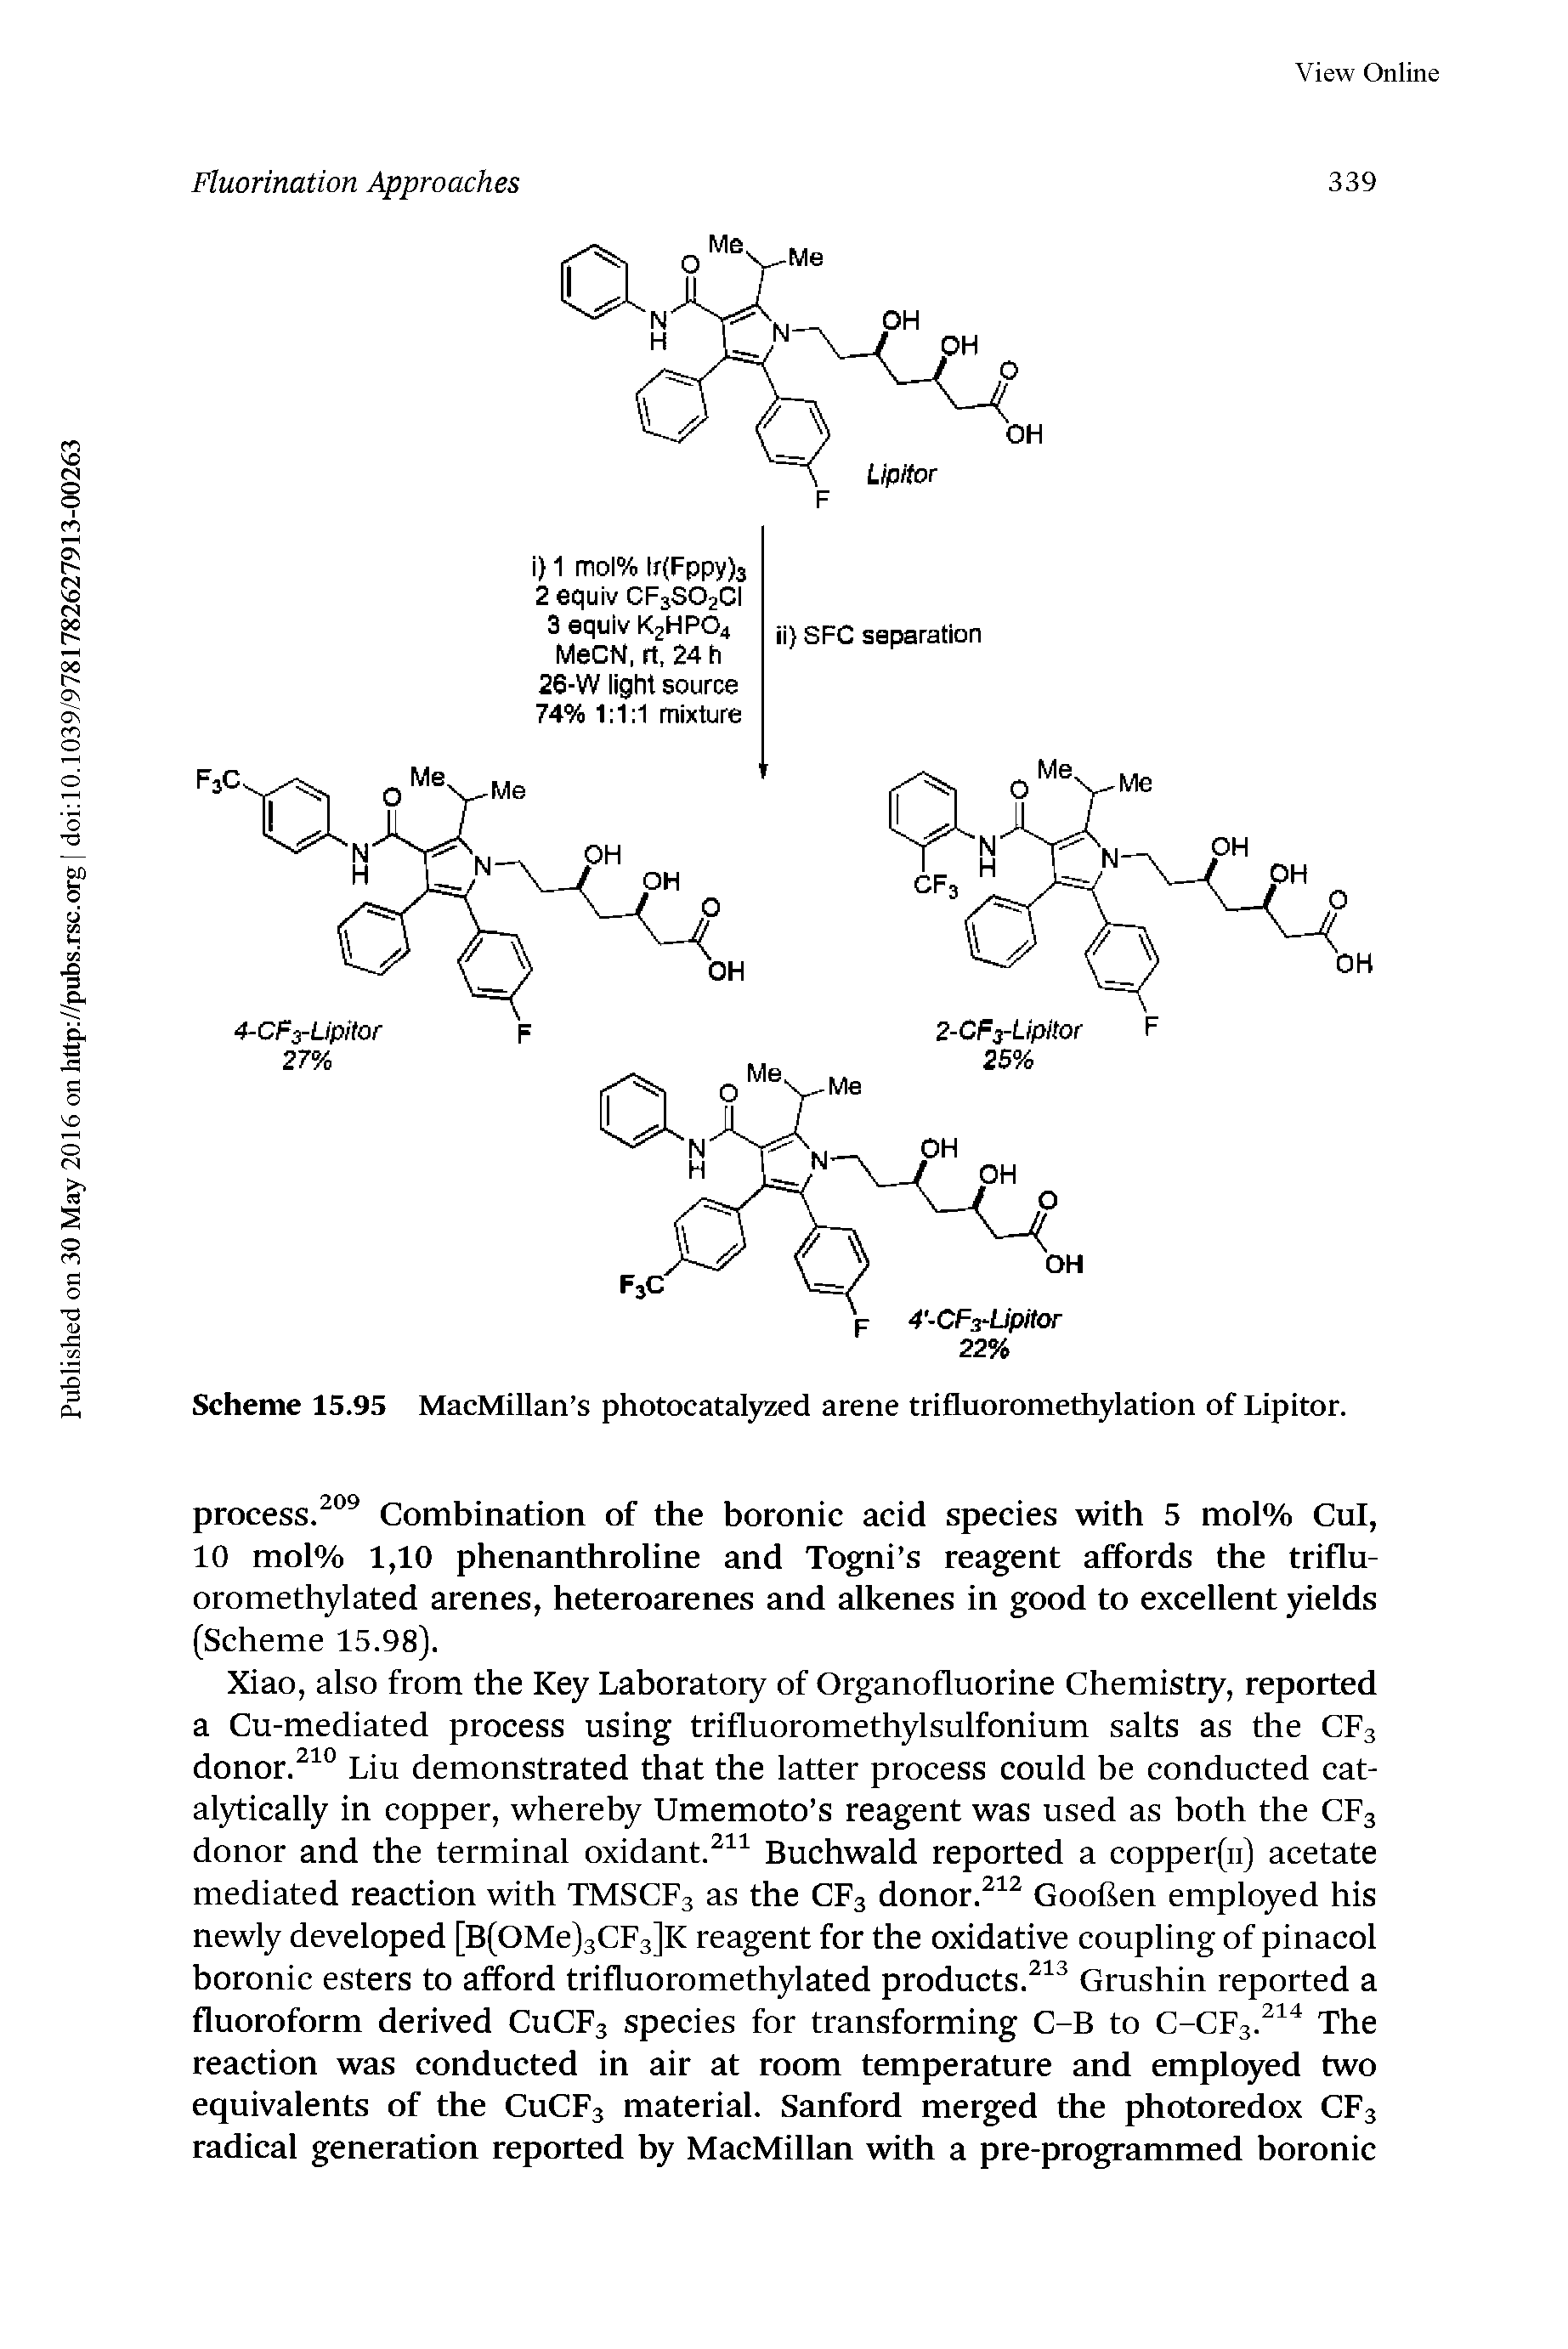 Scheme 15.95 MacMillan s photocatal rzed arene trifluoromethylation of Lipitor.